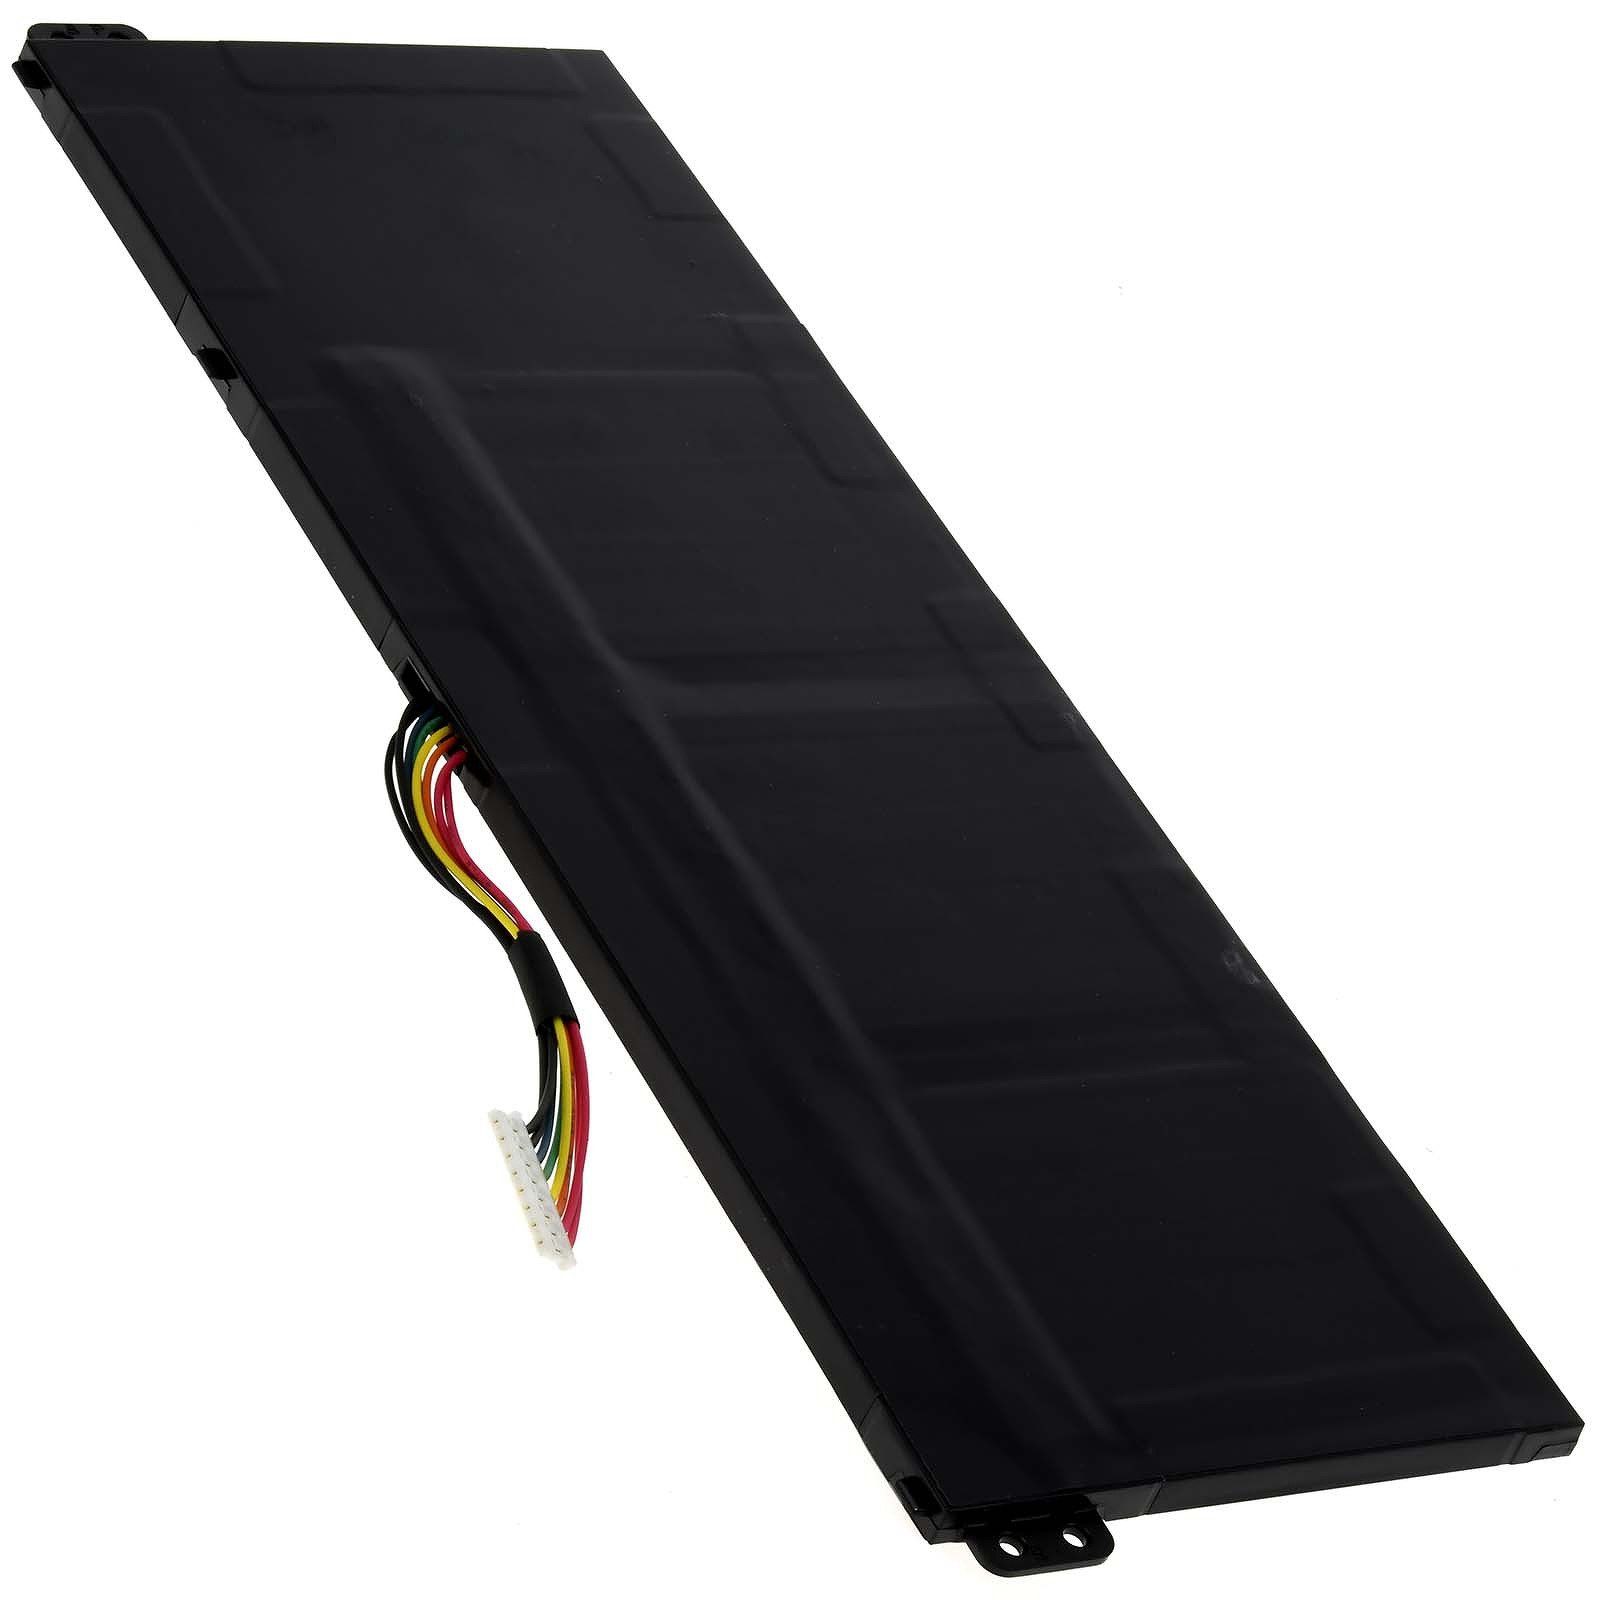 Powery für 3 Acer SF314-57-538R Akku (11.25 V) mAh 3700 Swift Laptop-Akku